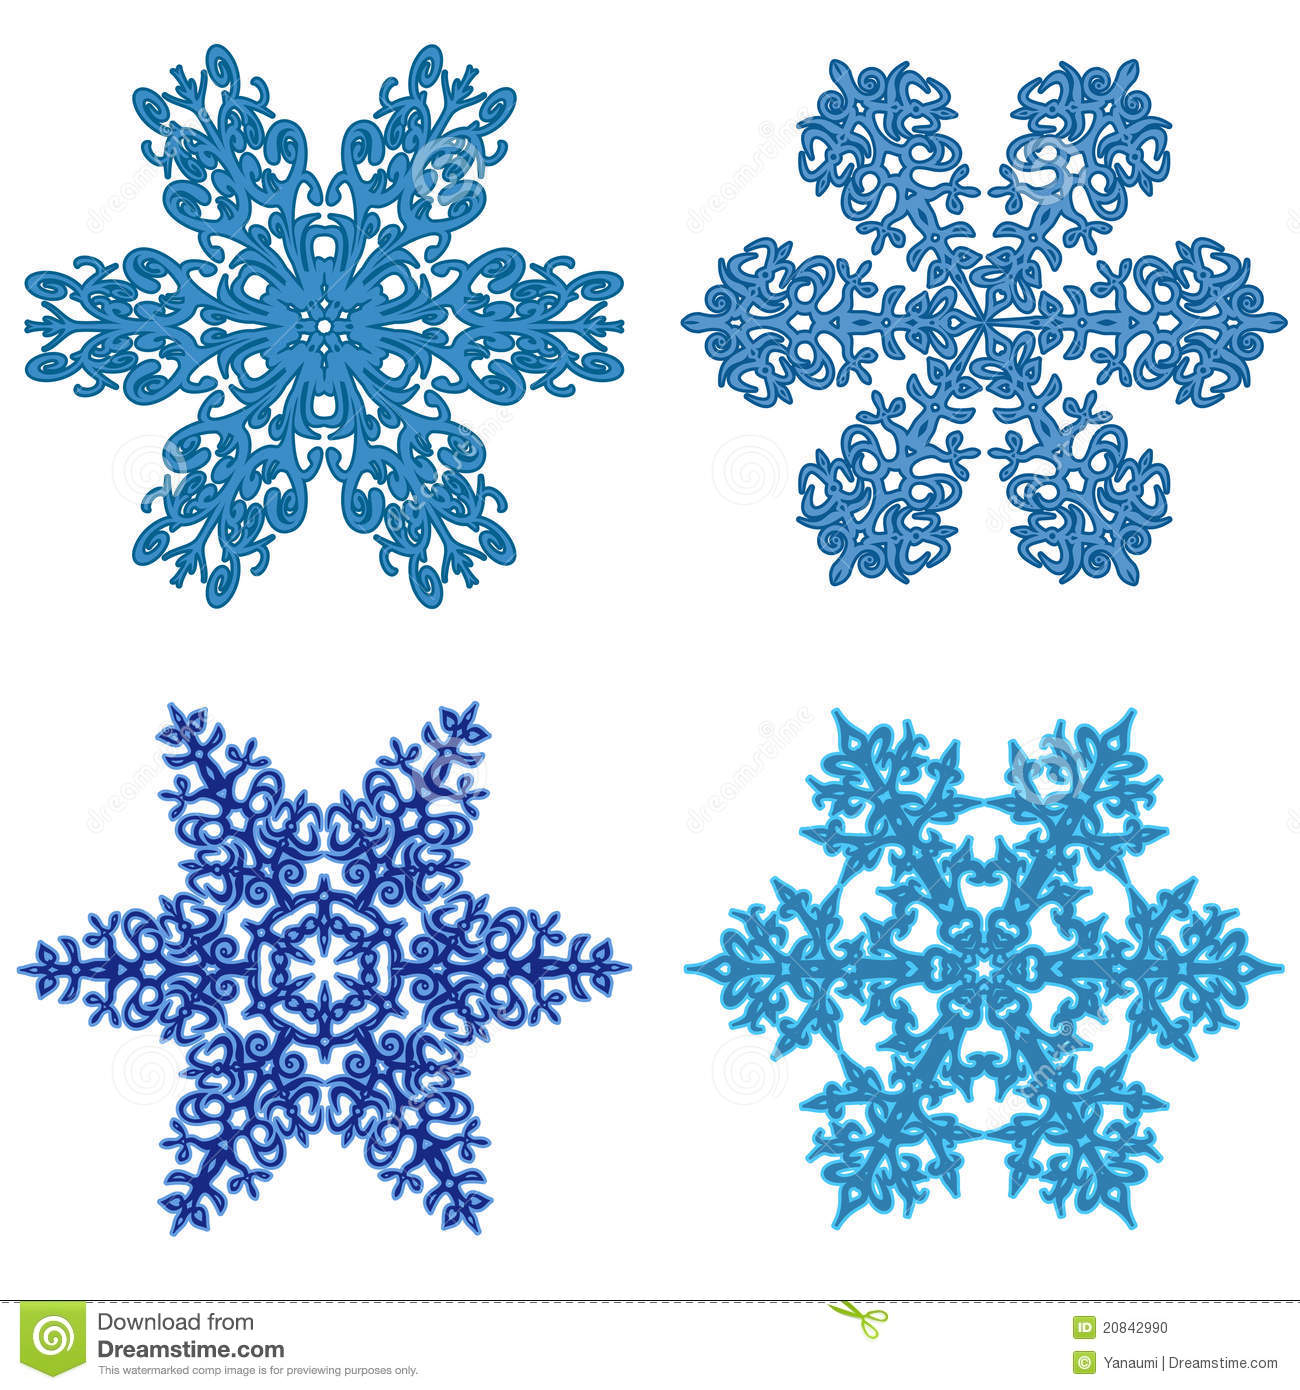 Snowflakes clipart